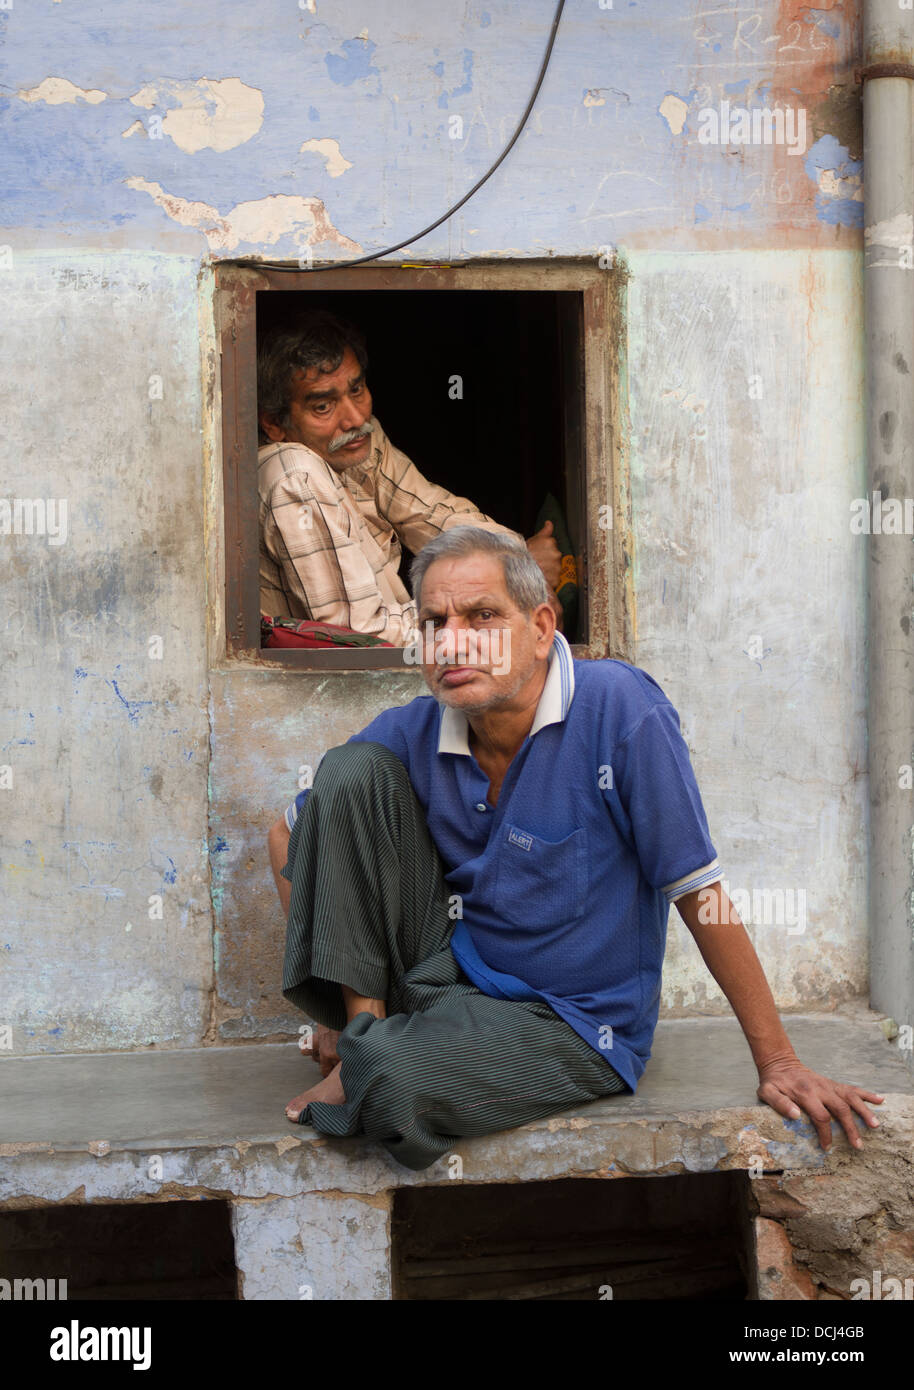 Two men on the street - Jodhpur, Rajashtan, India Stock Photo